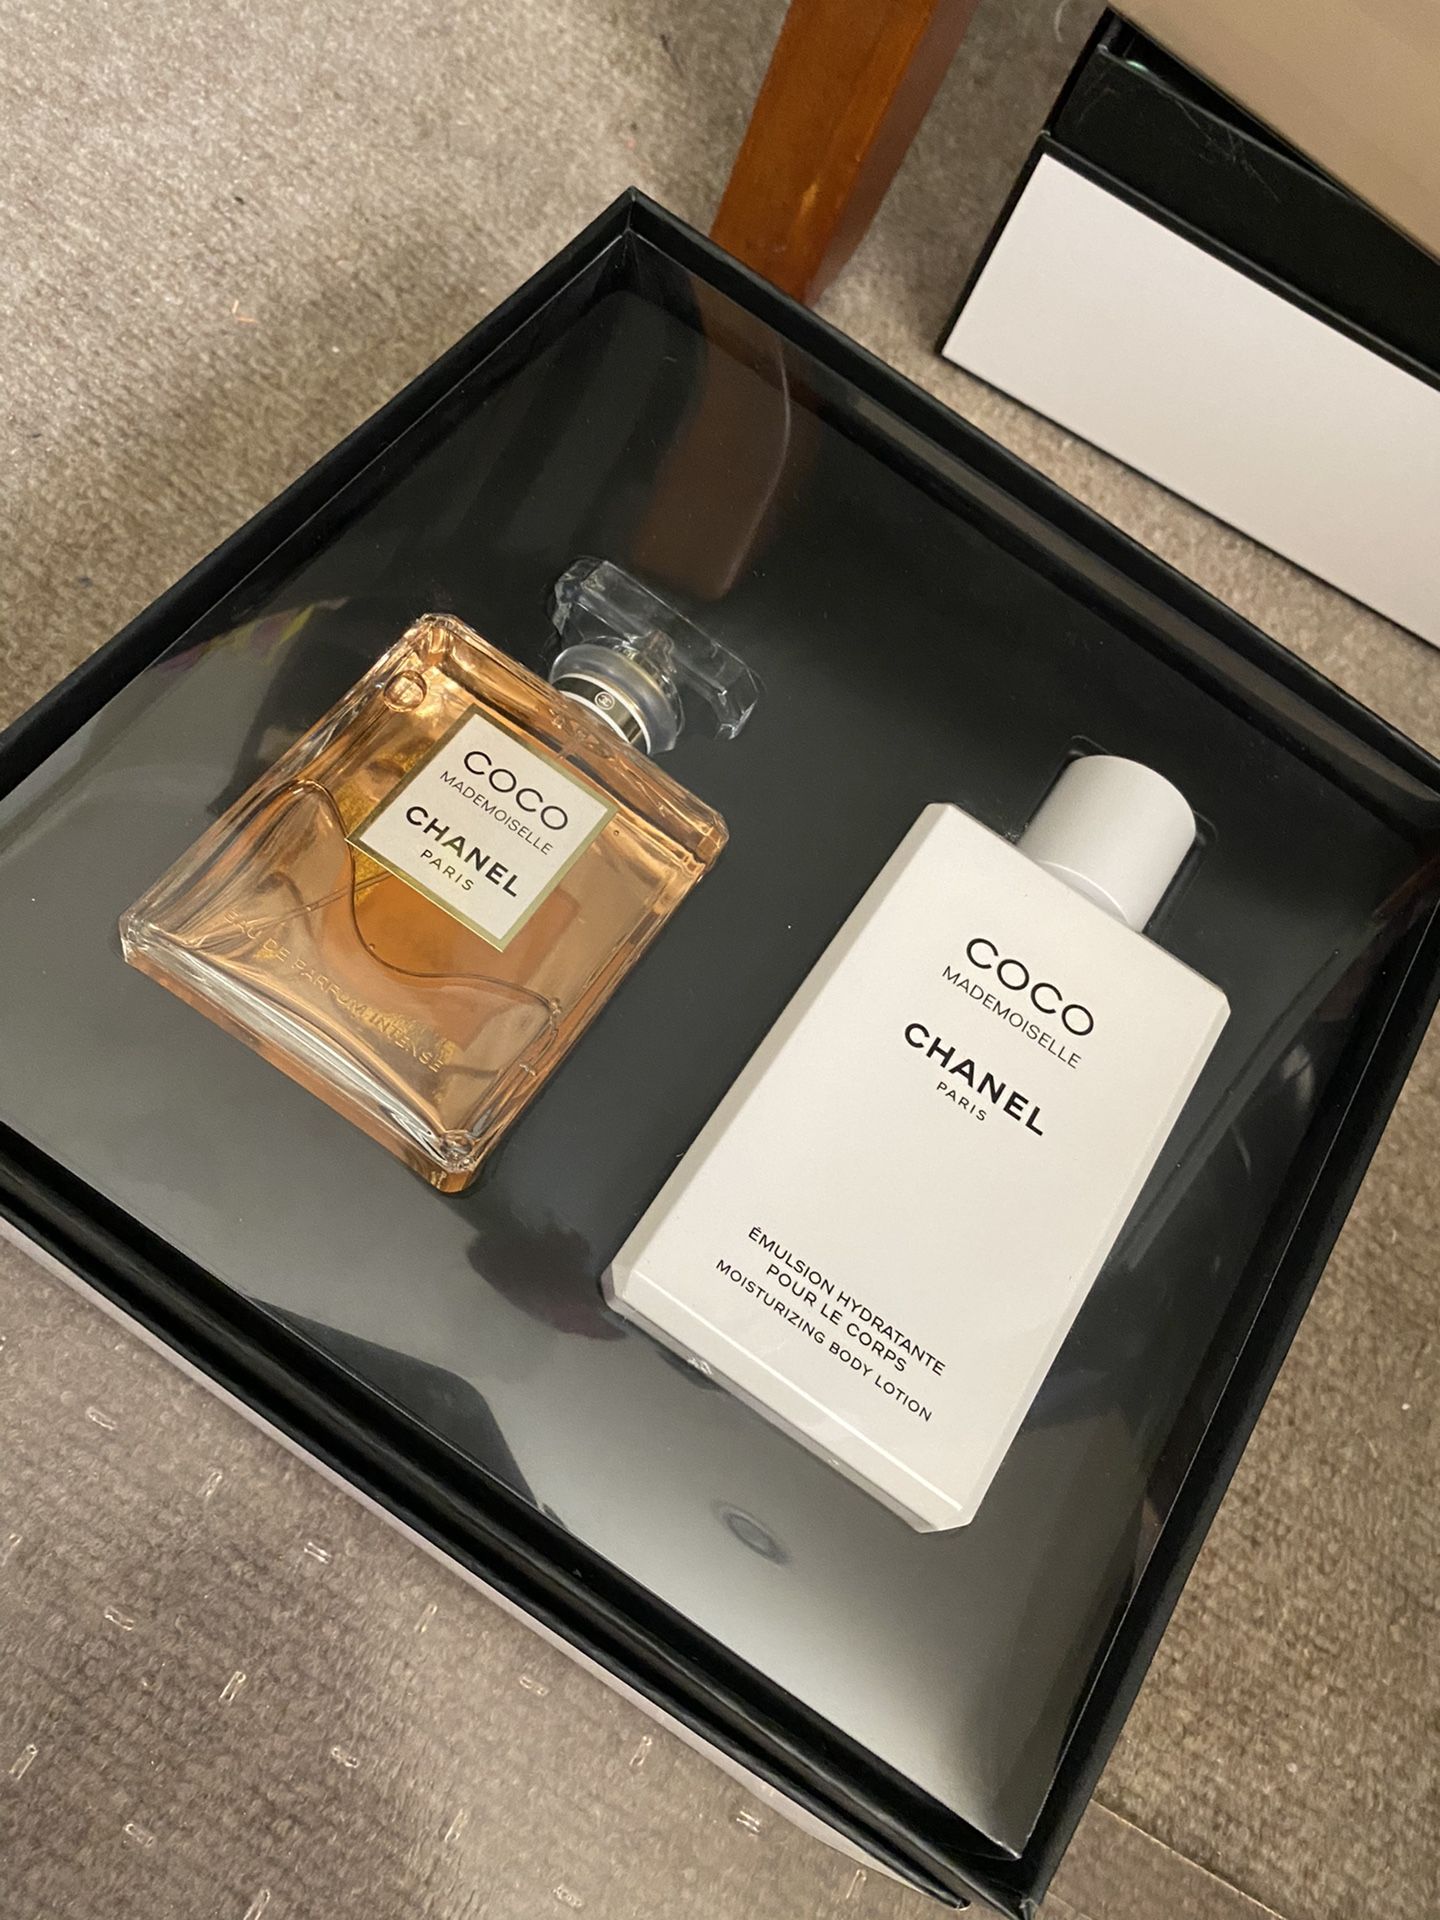 Chanel coco perfume set